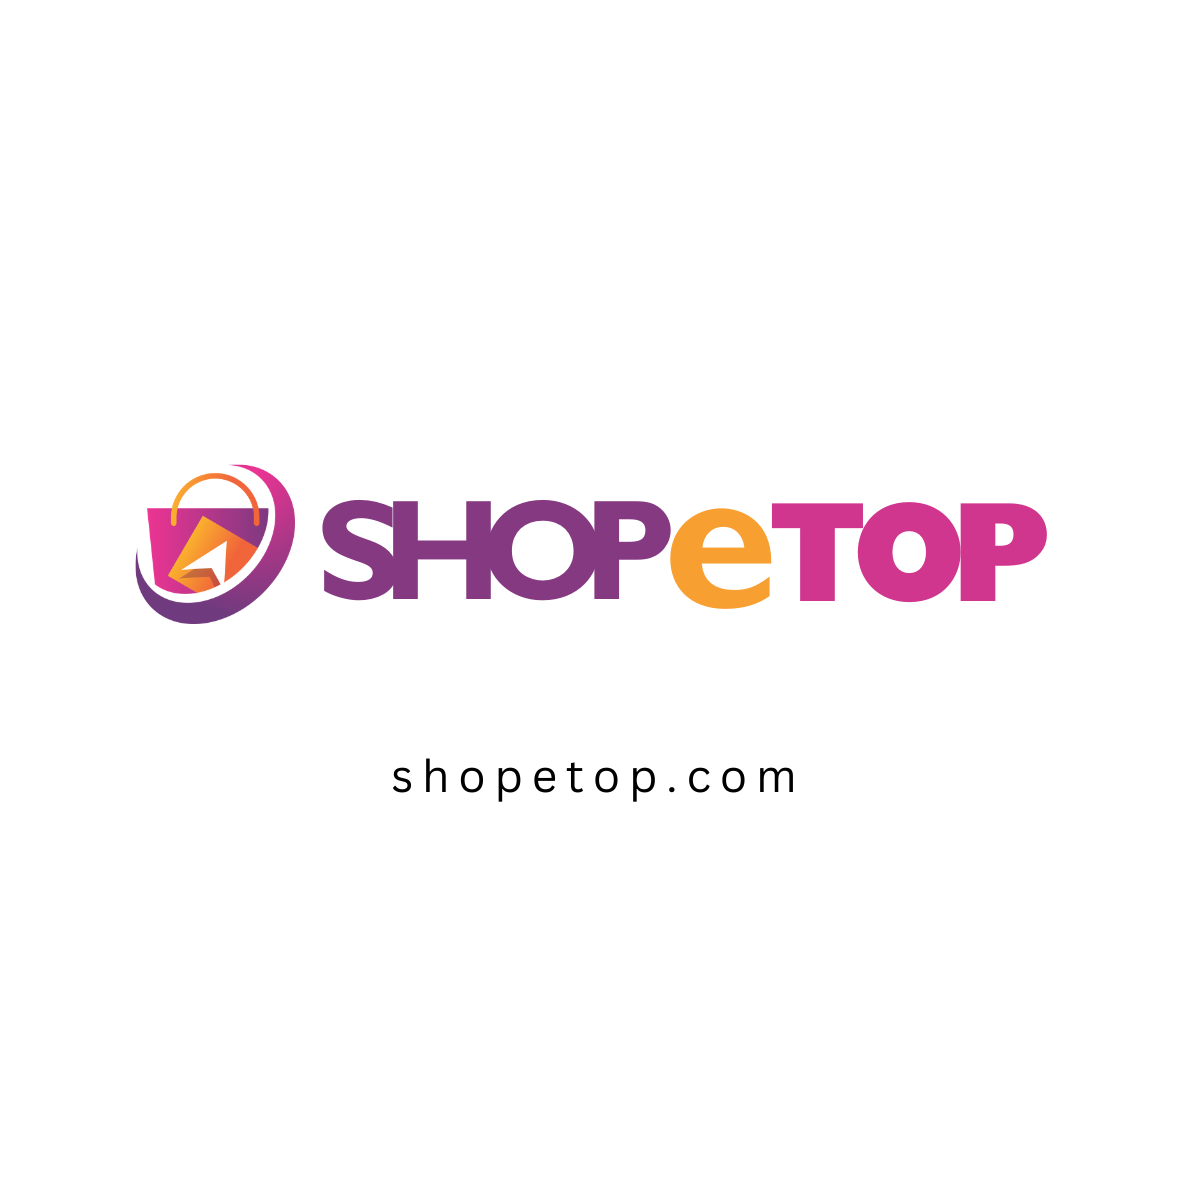 shopetop.com - domain for sale